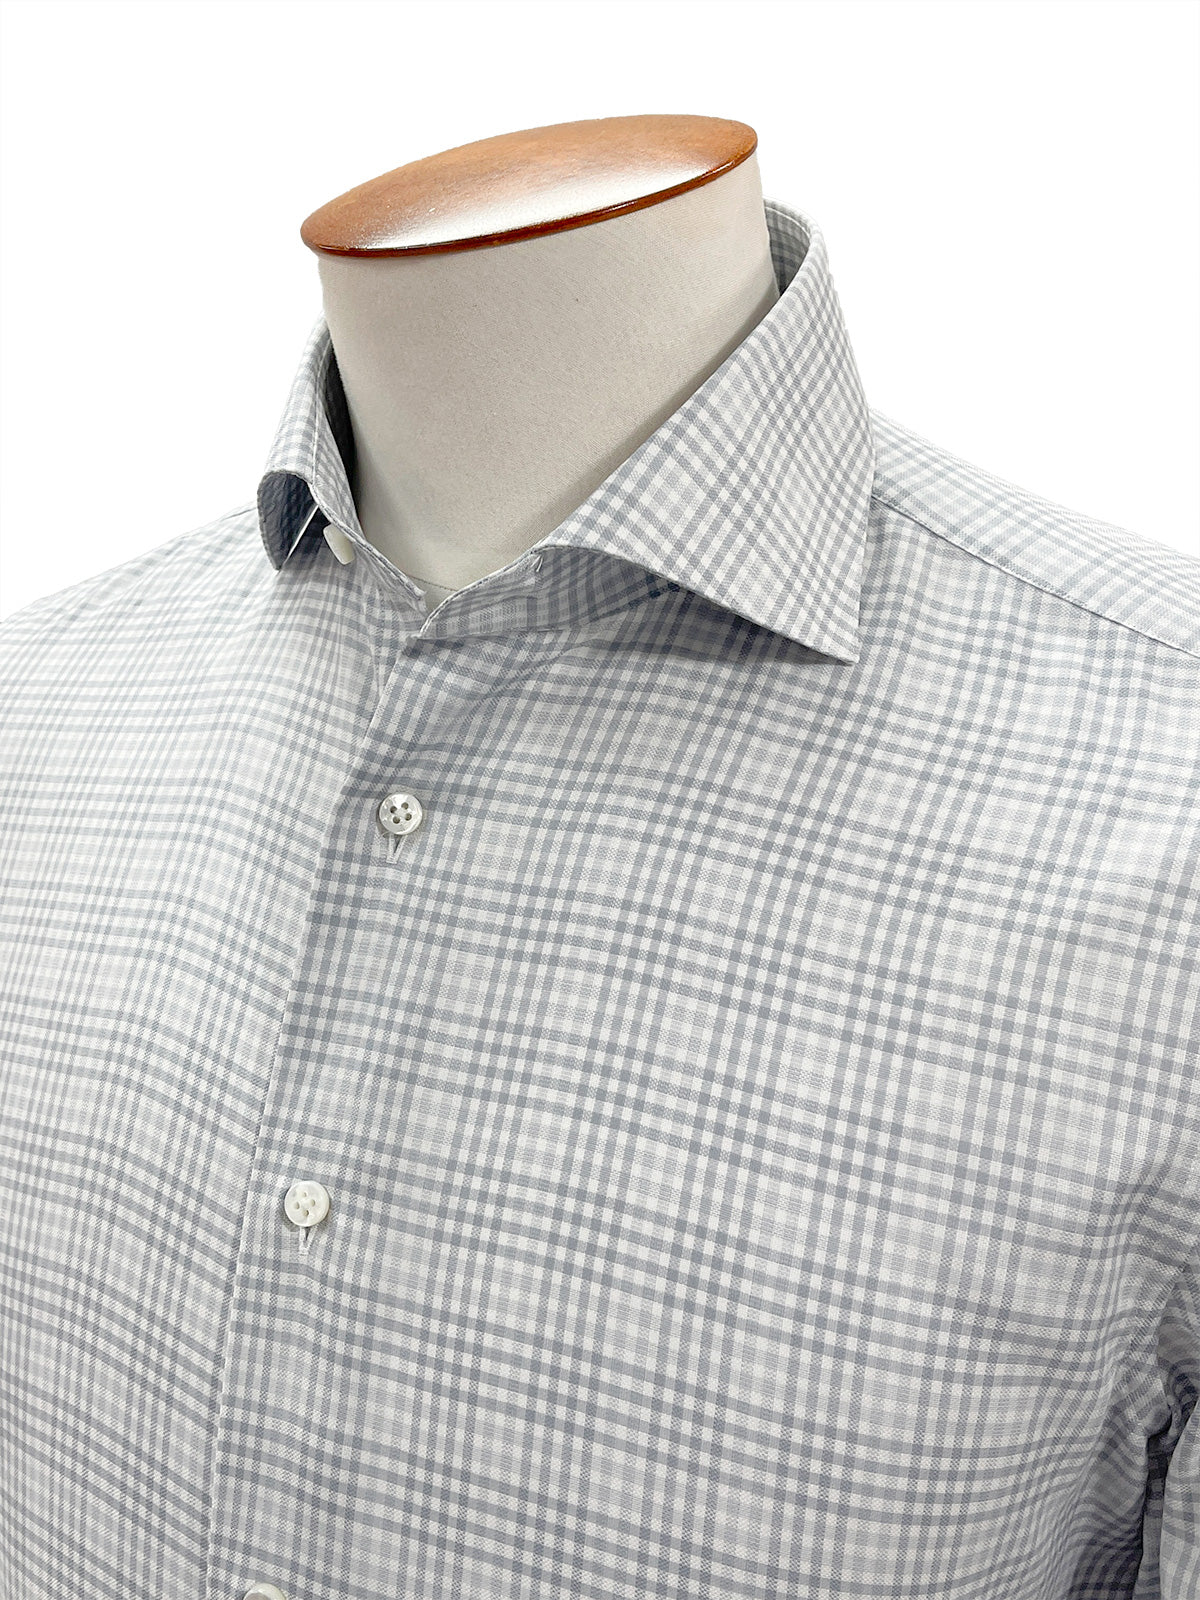 Silvern Check Cutaway Collar Shirt